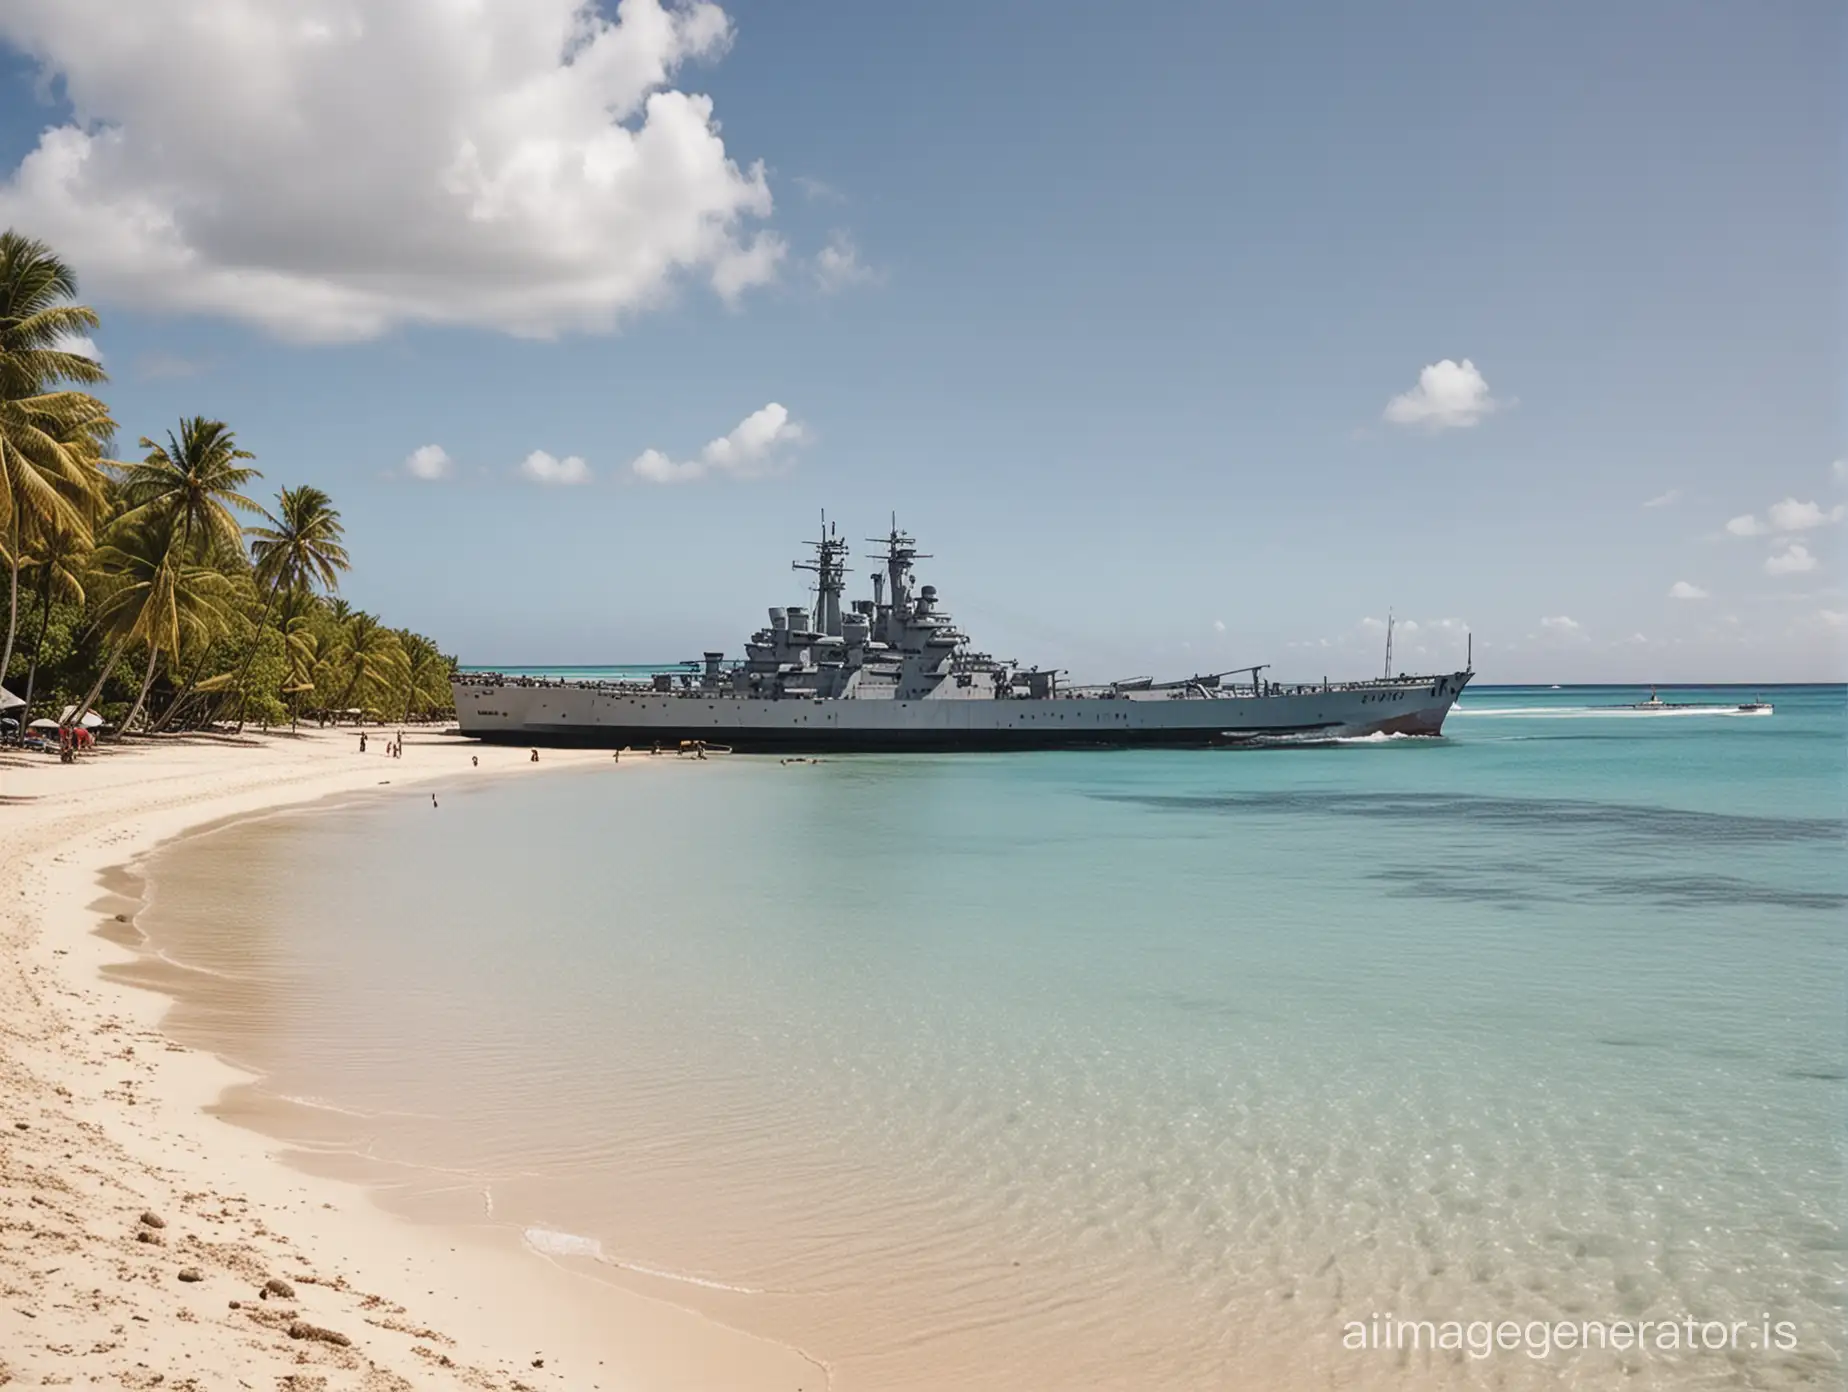 Mauritius Beach and sea, Large Battleship on shore